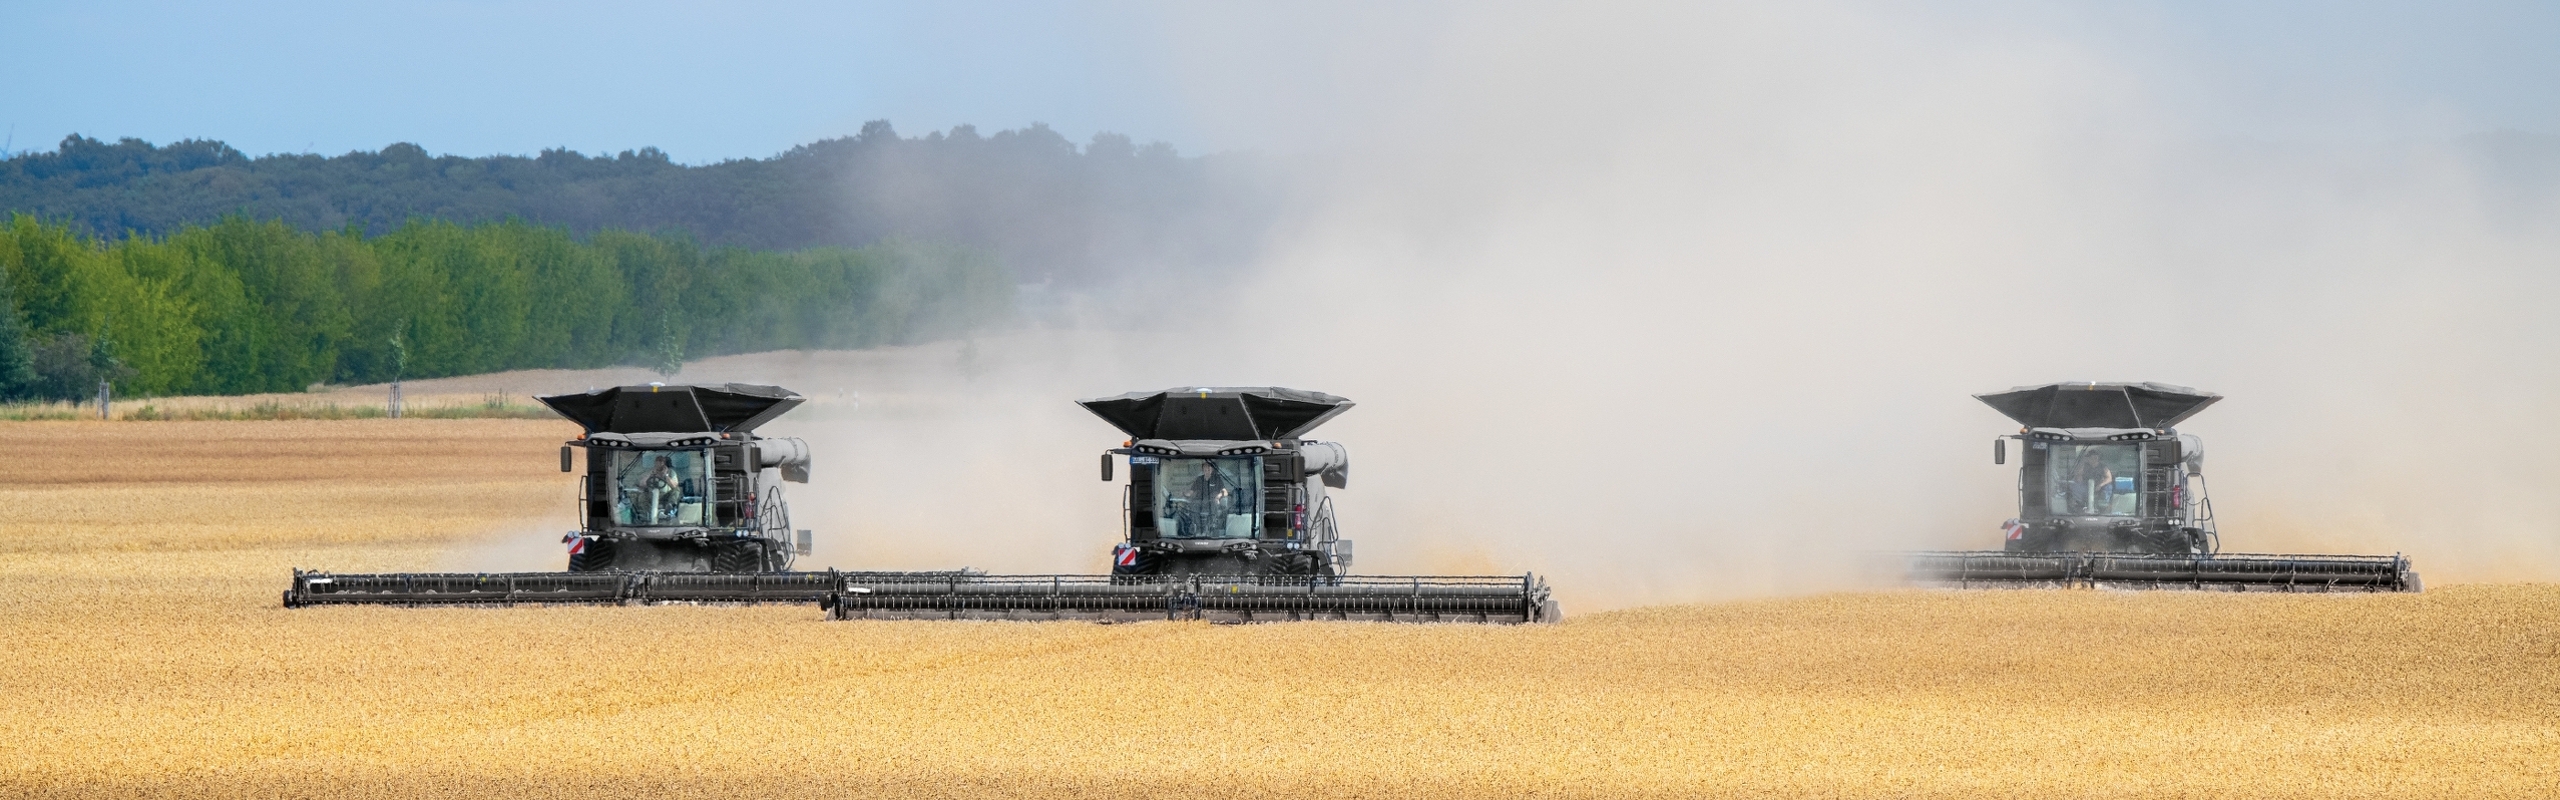 3 Fendt IDEAL models driving side-by-side in a wheat field